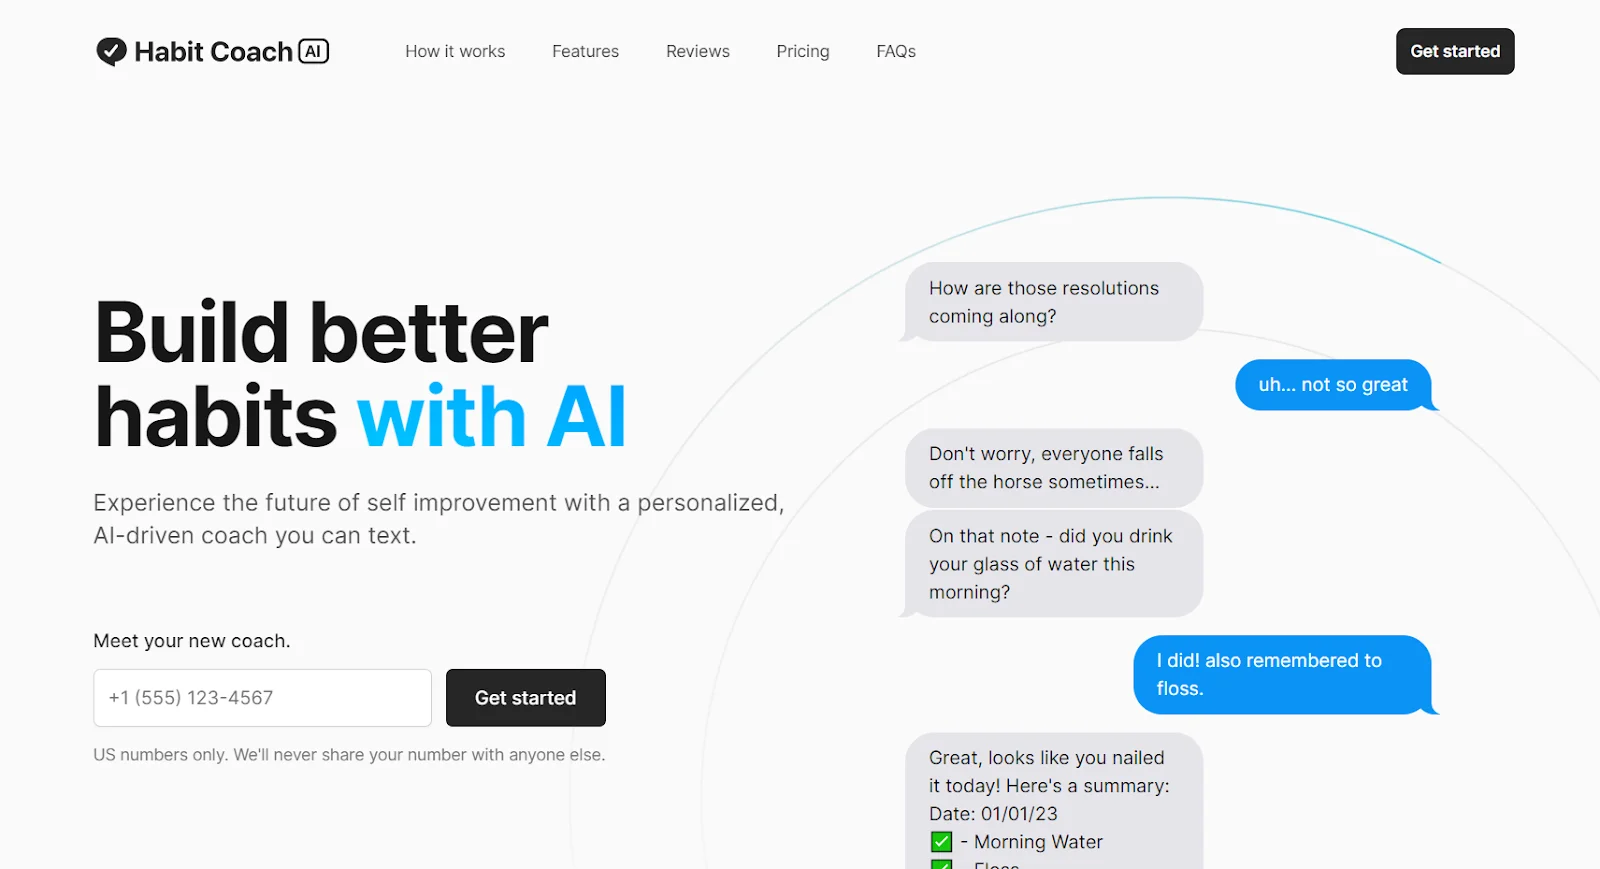 HabitCoach.ai Website - Build better habits with AI